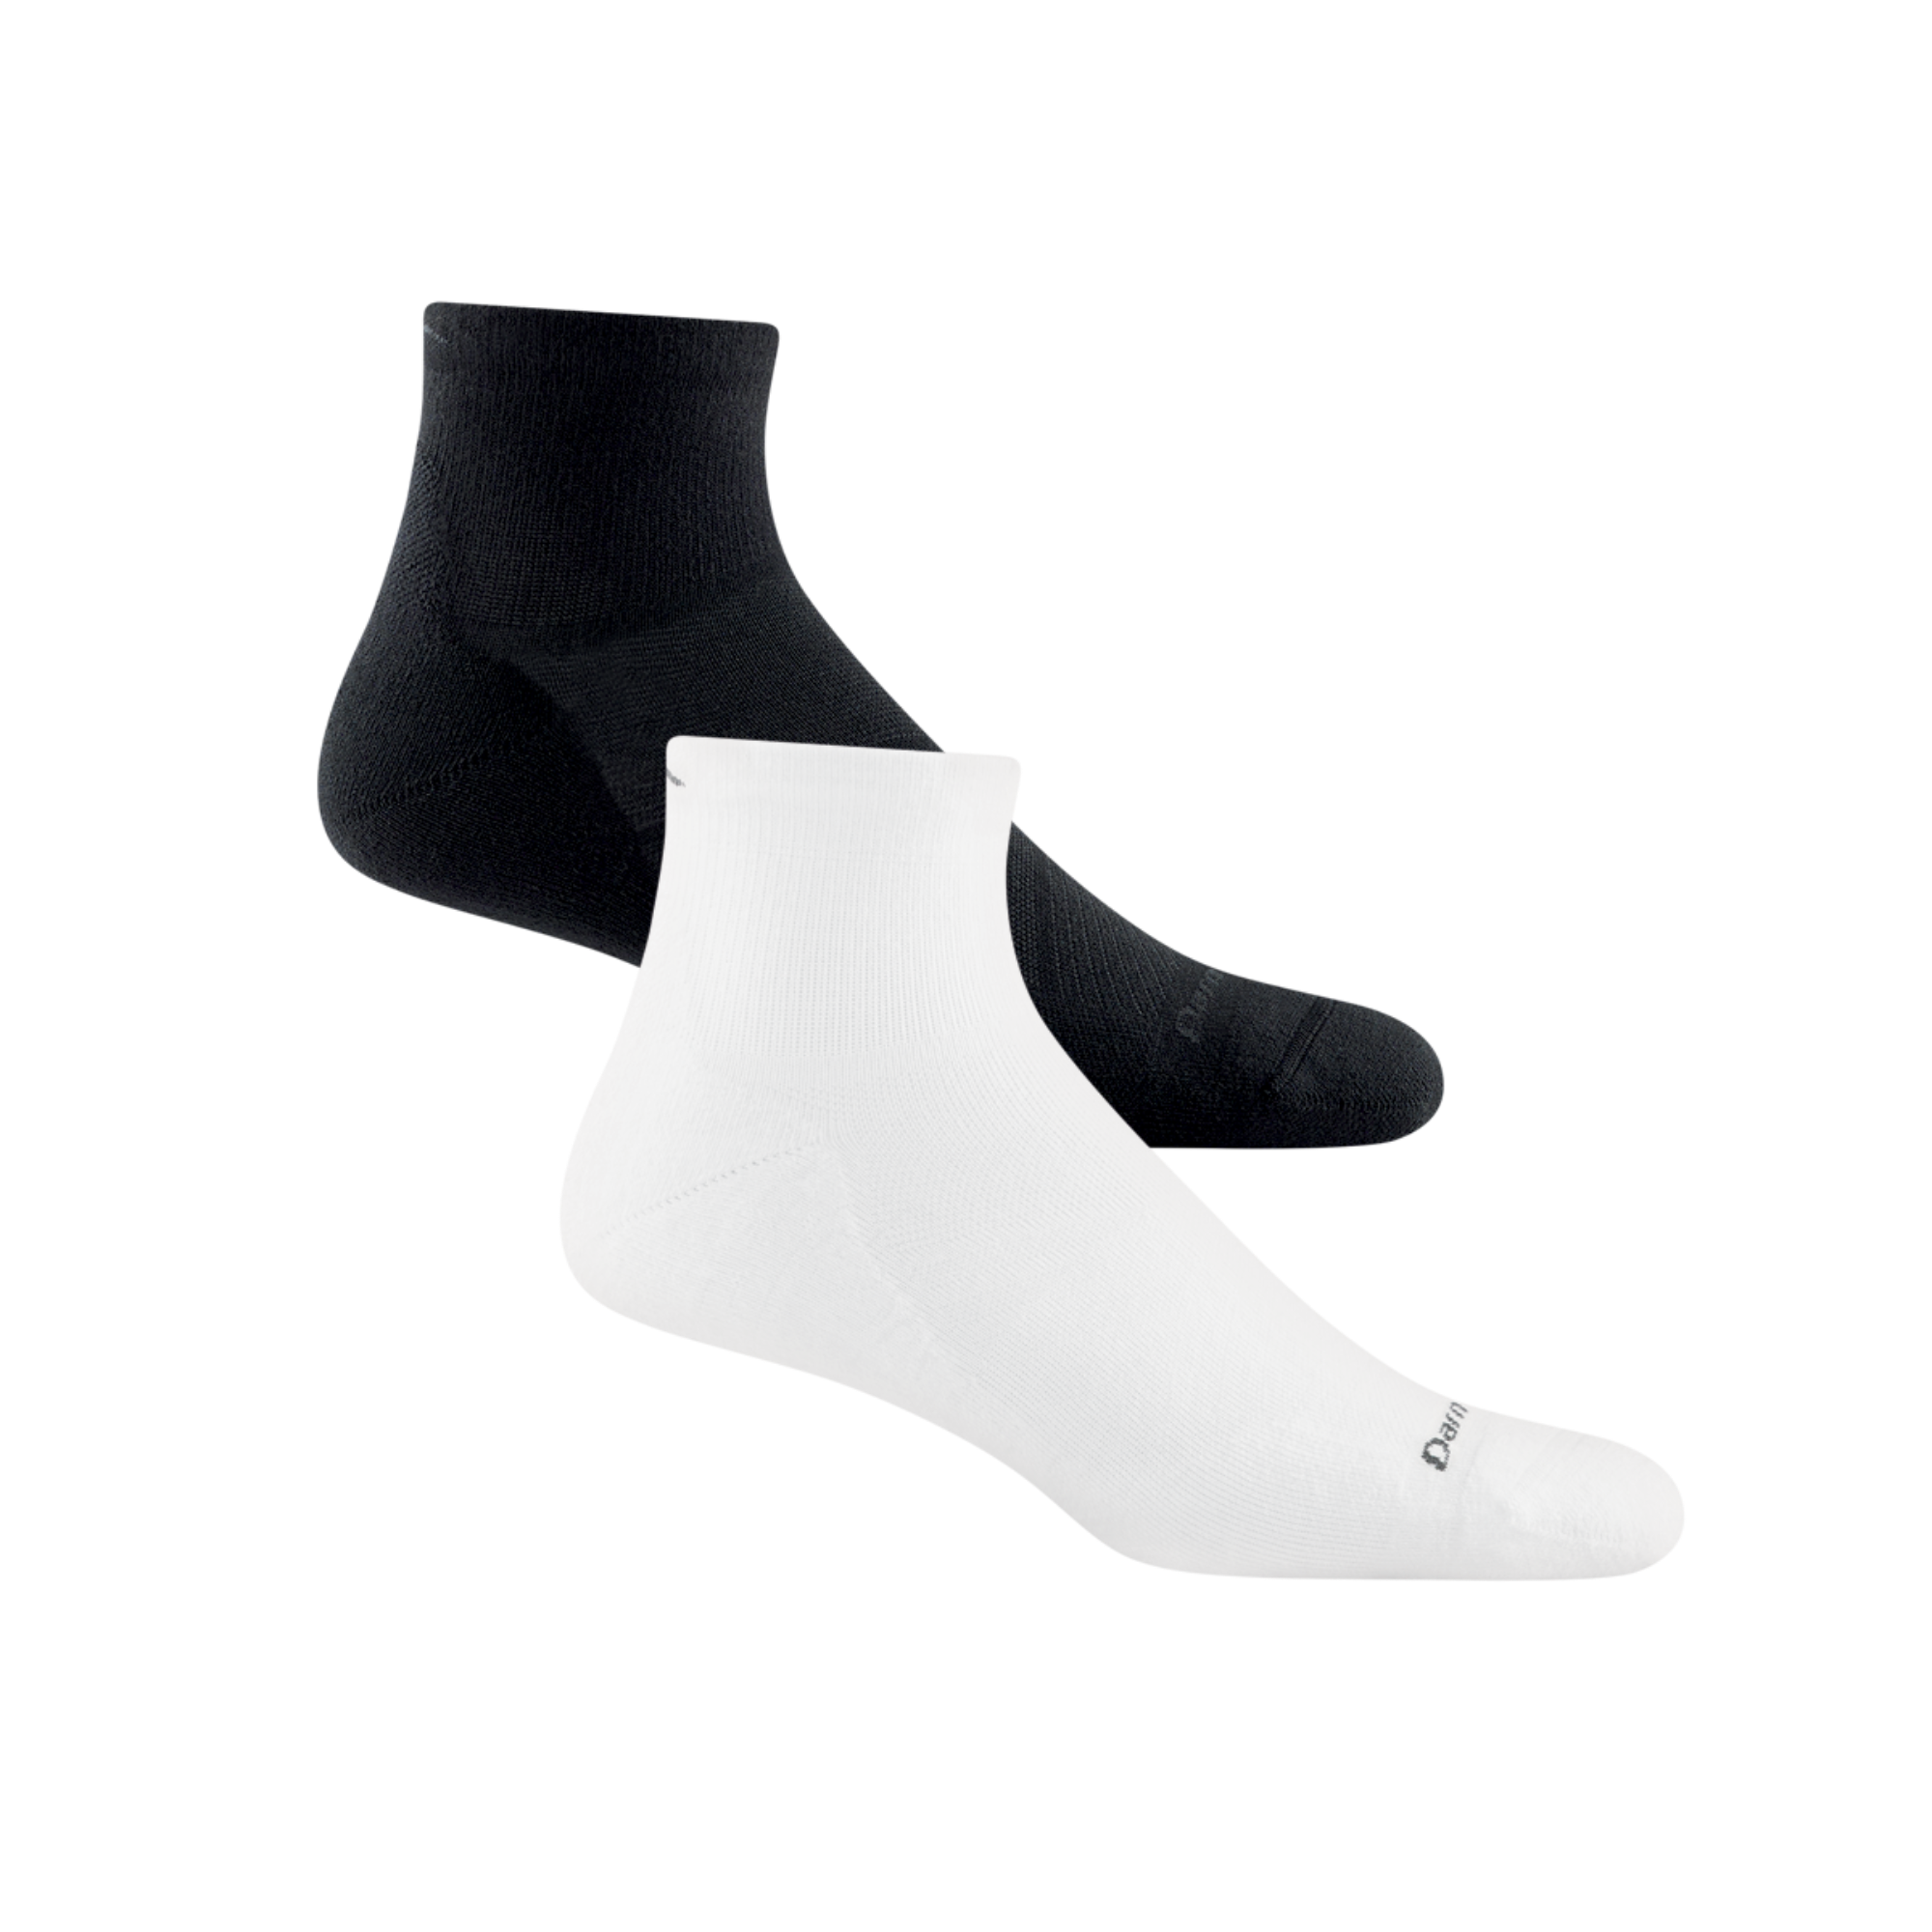 2 pack bundle shot of men's coolmax quarter running sock in black and white